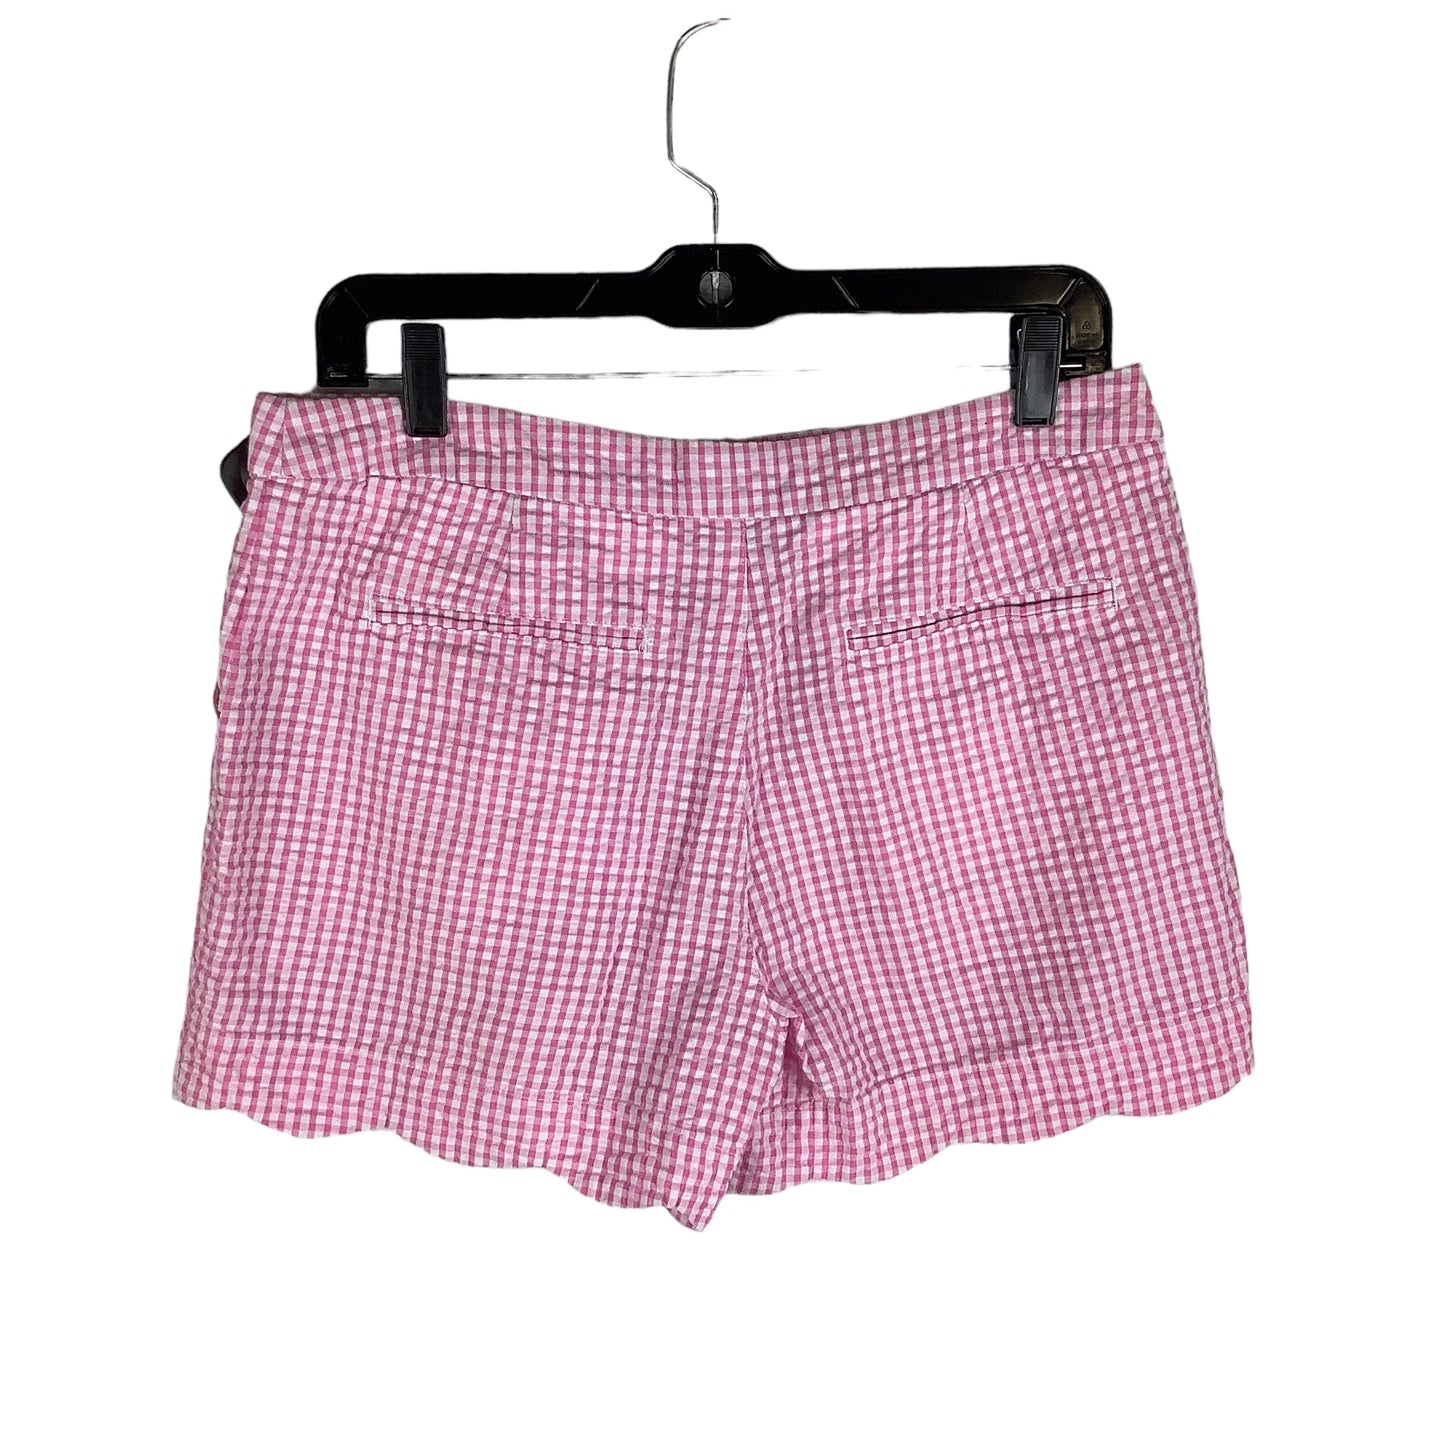 Pink Shorts Cynthia Rowley, Size 4